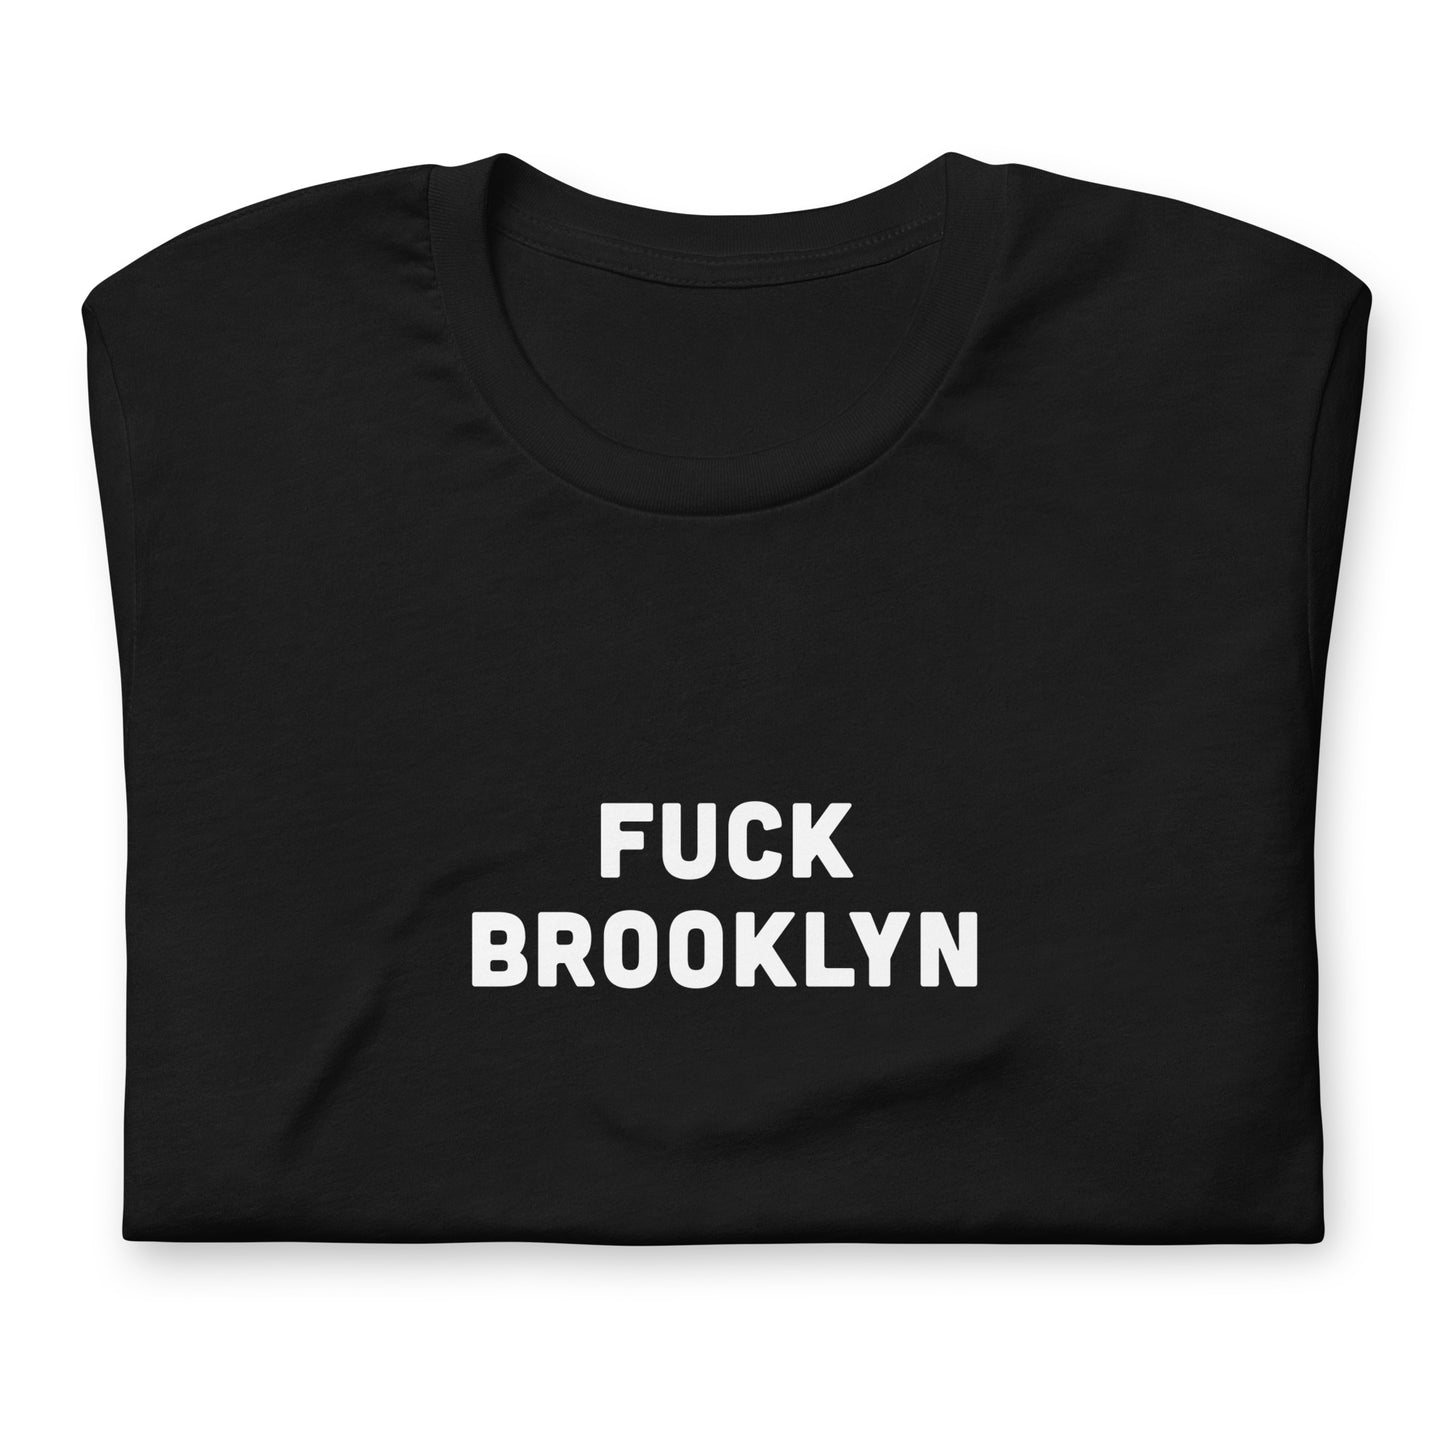 Fuck Brooklyn T-Shirt Size M Color Black